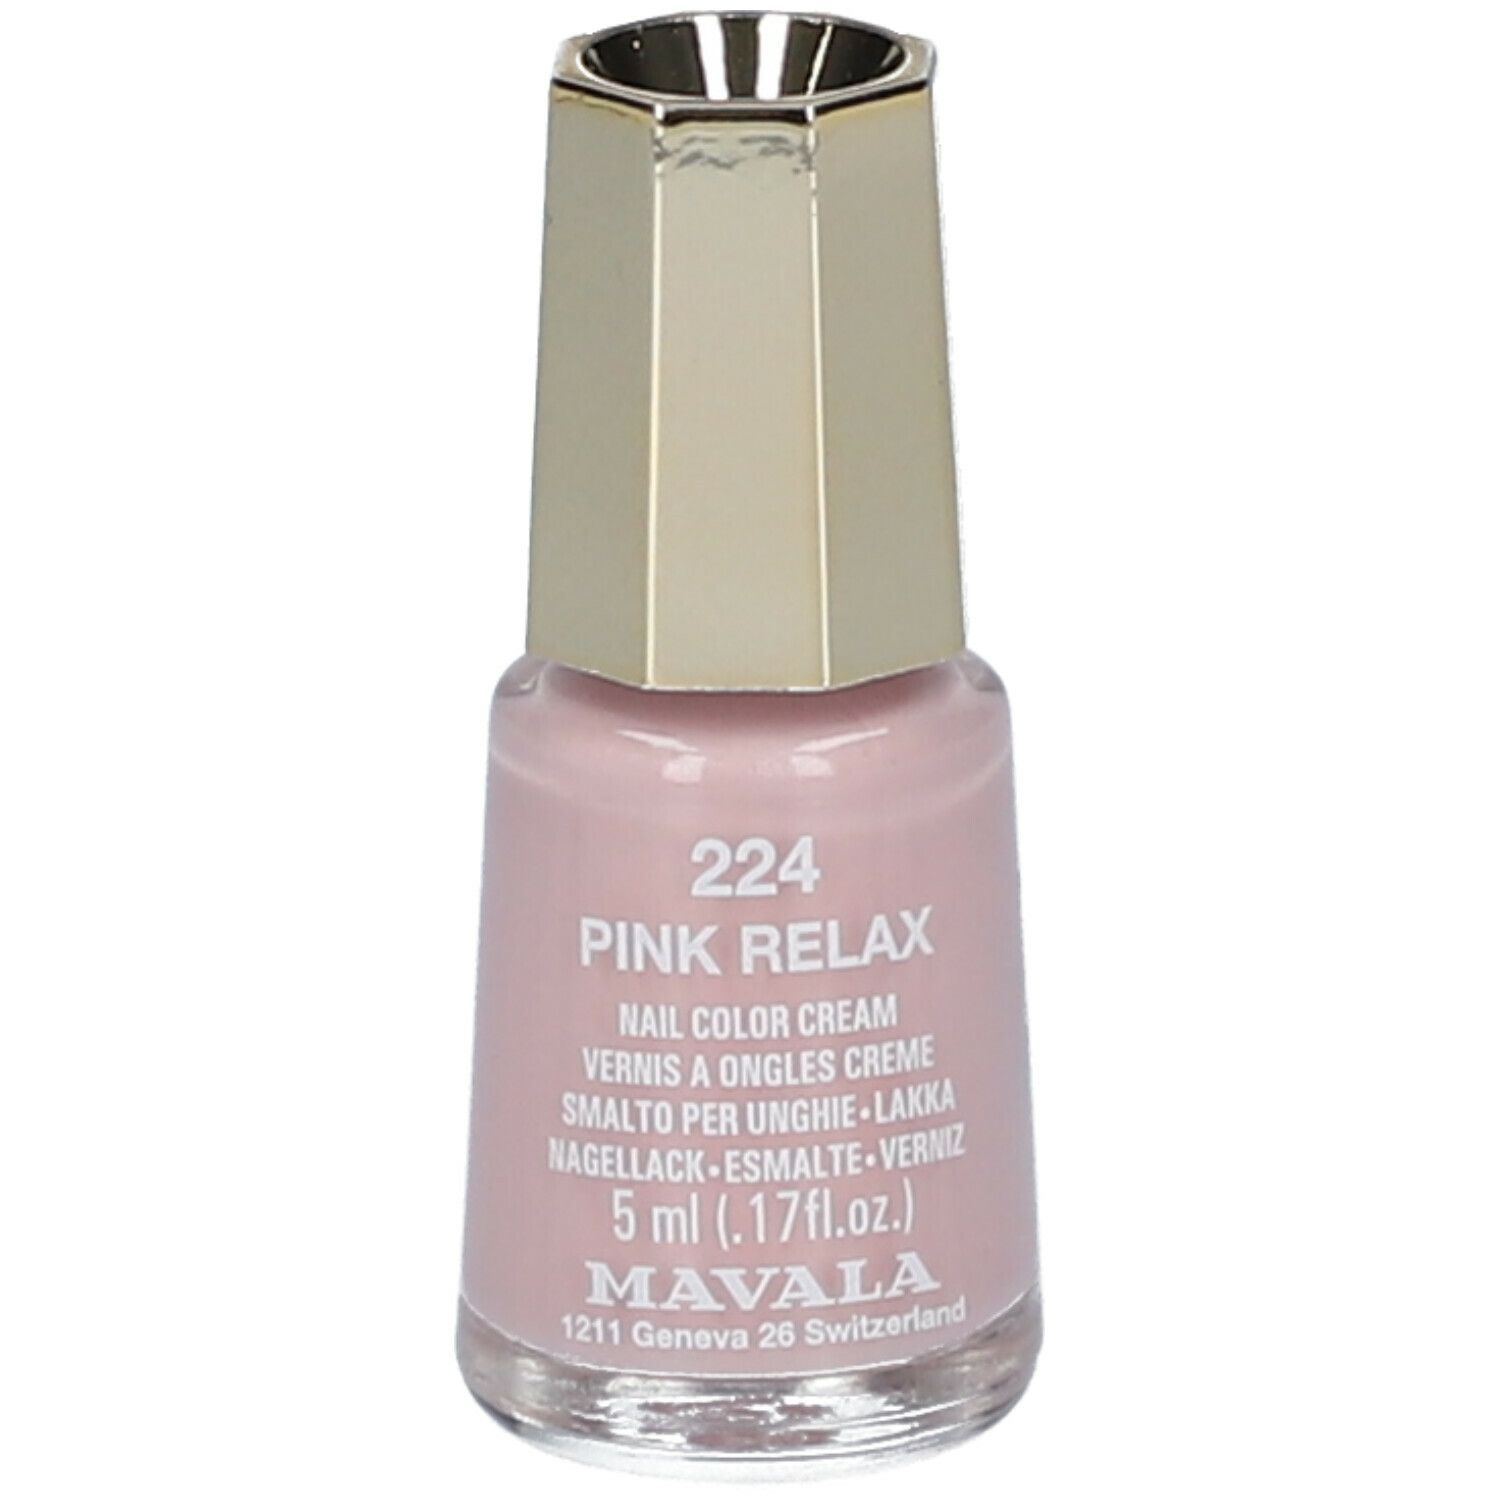 Image of MAVALA Mini Color Nagellack - Pink Relax 224